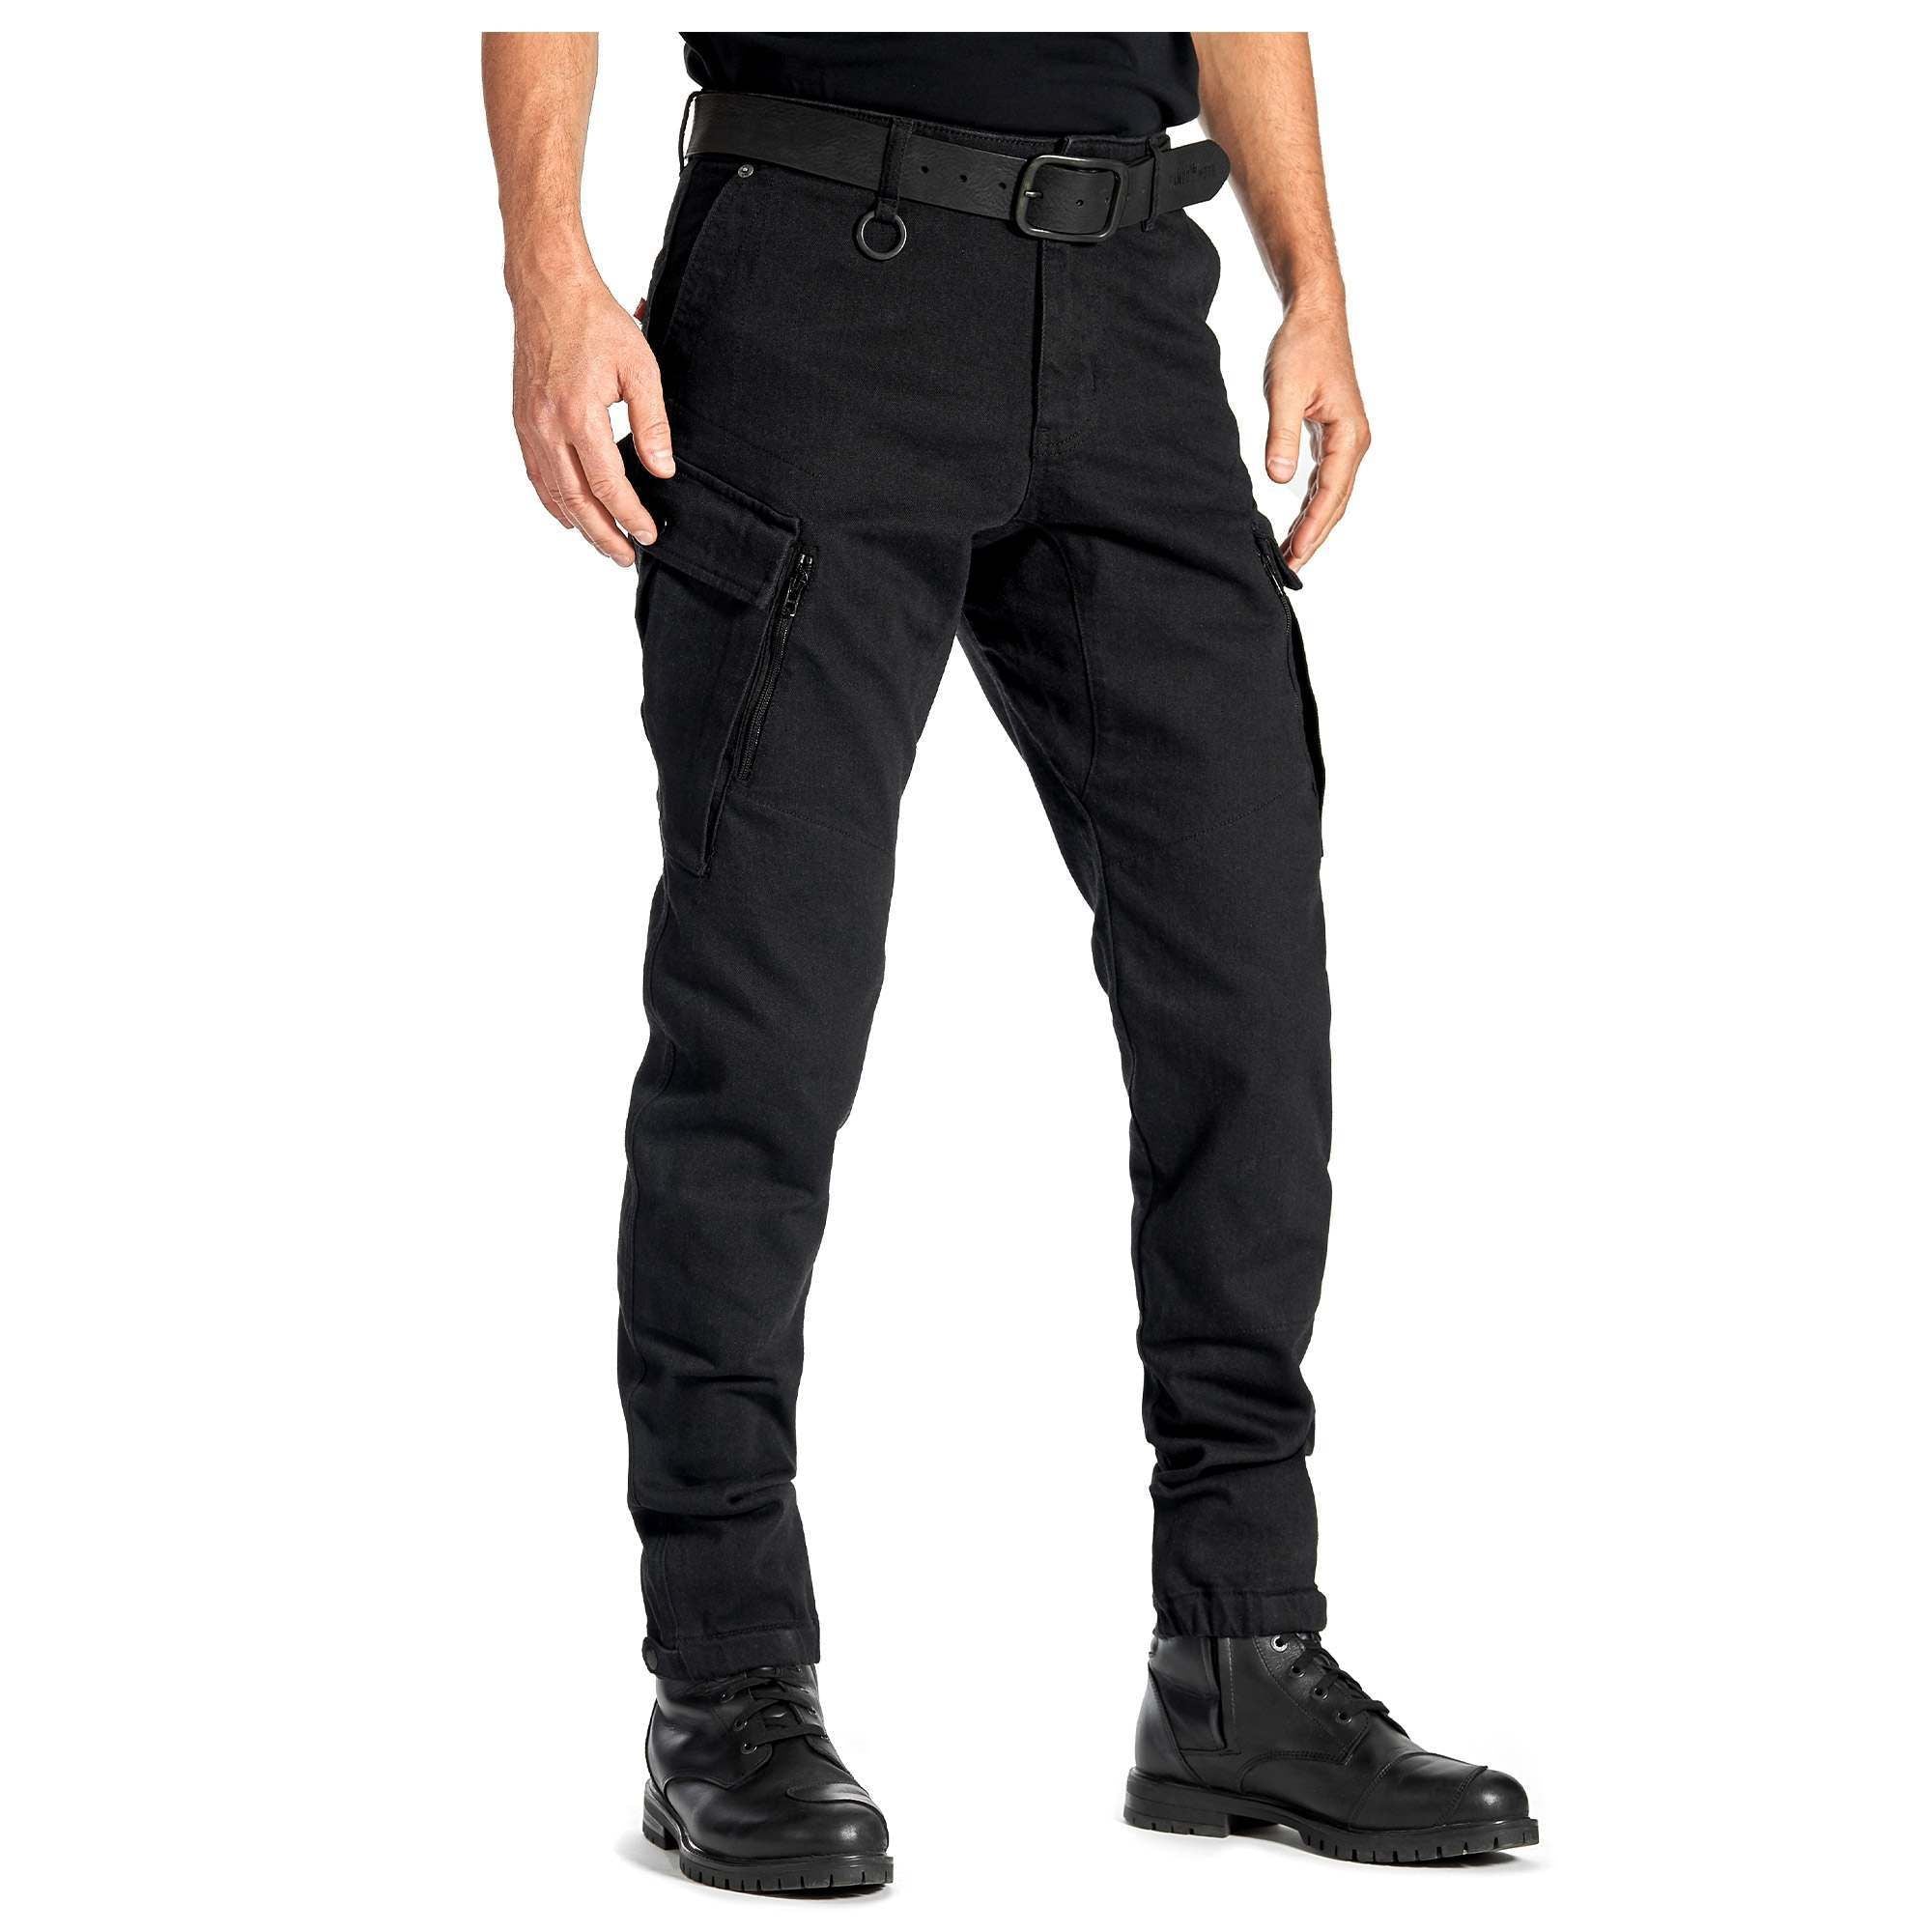 Pando Moto Mark Kev 01 Jeans, Length 32 - Black